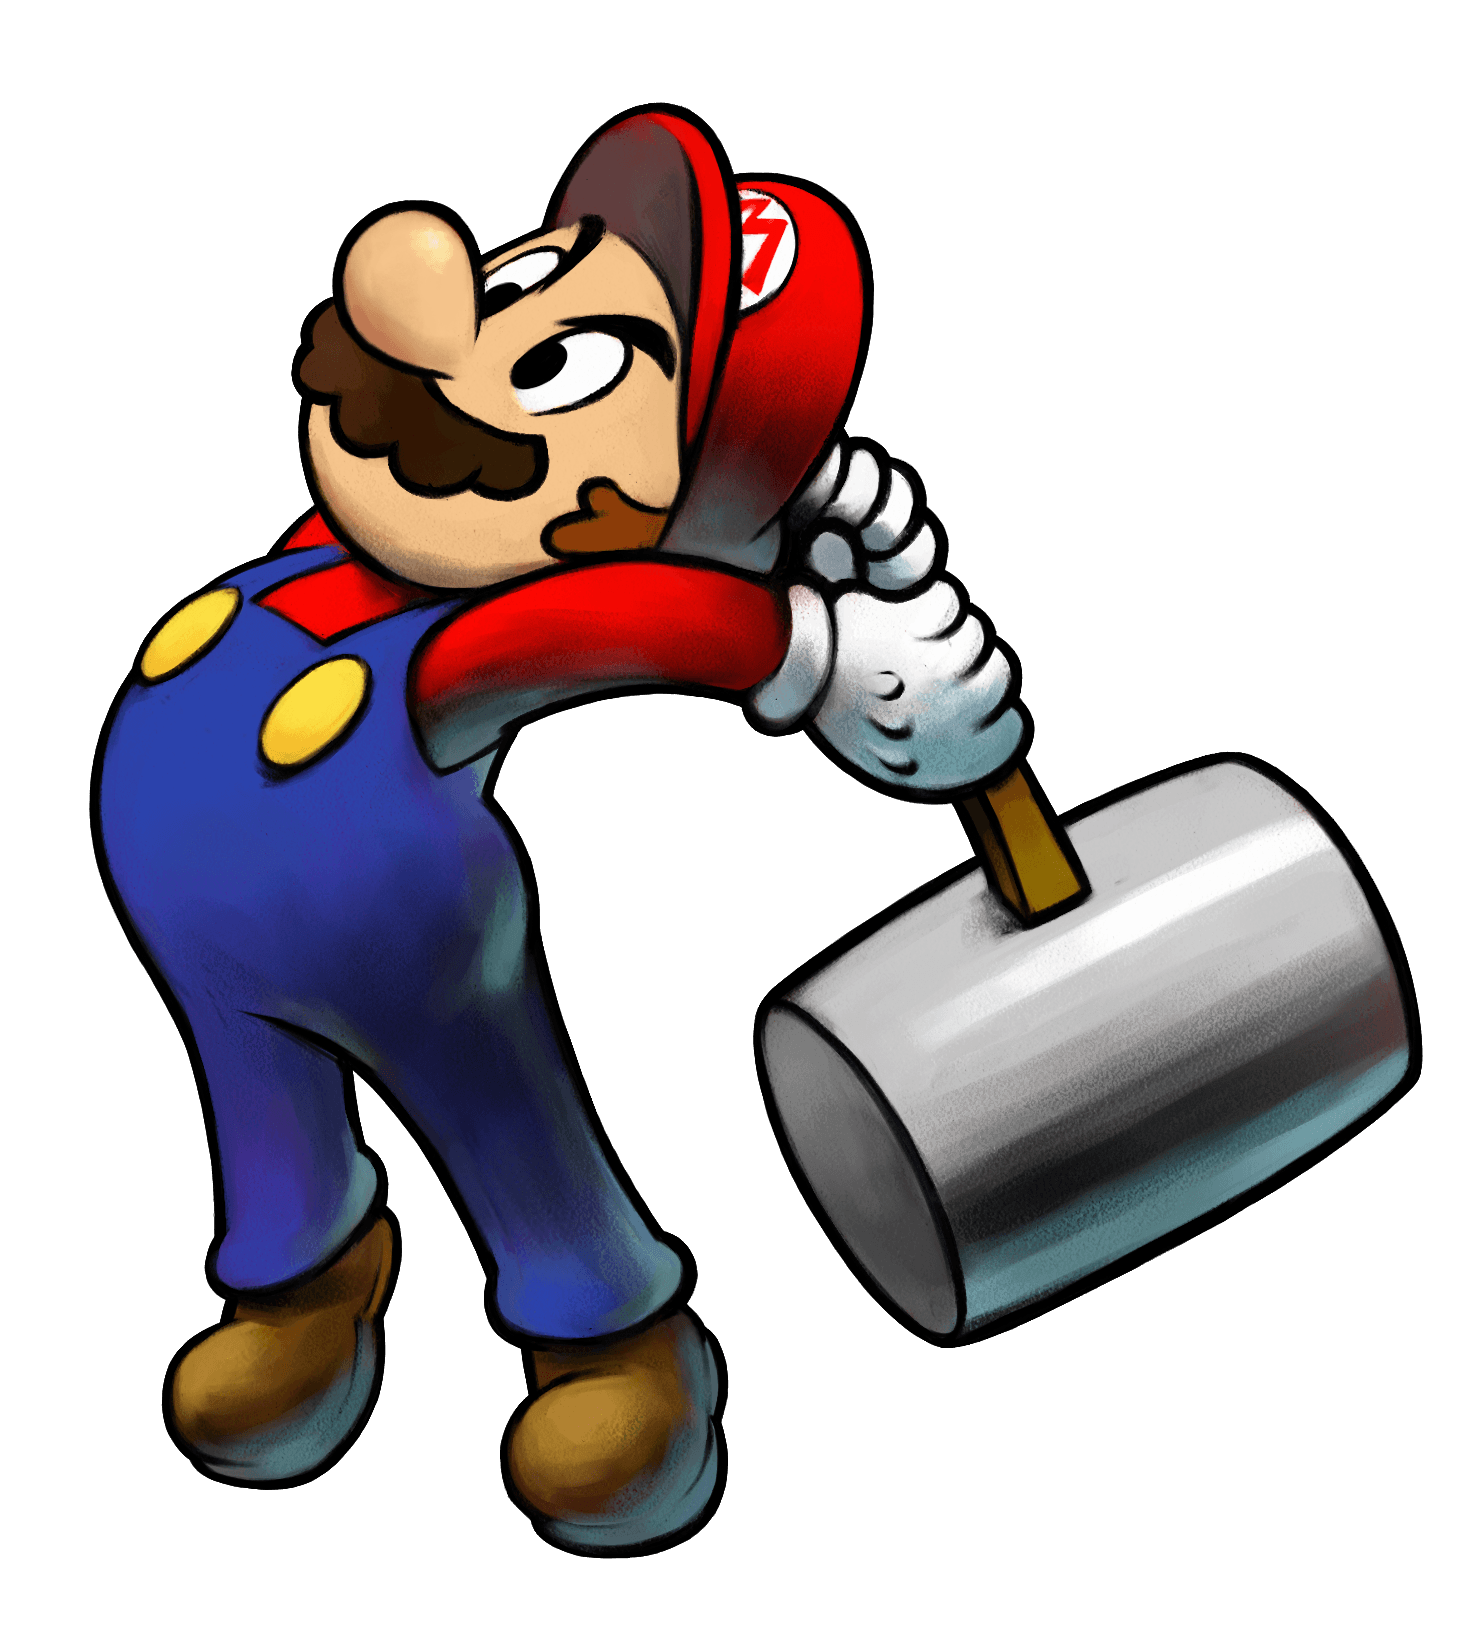 Mario & Luigi Bowser's Inside Story plus Bowser Jr's Journey